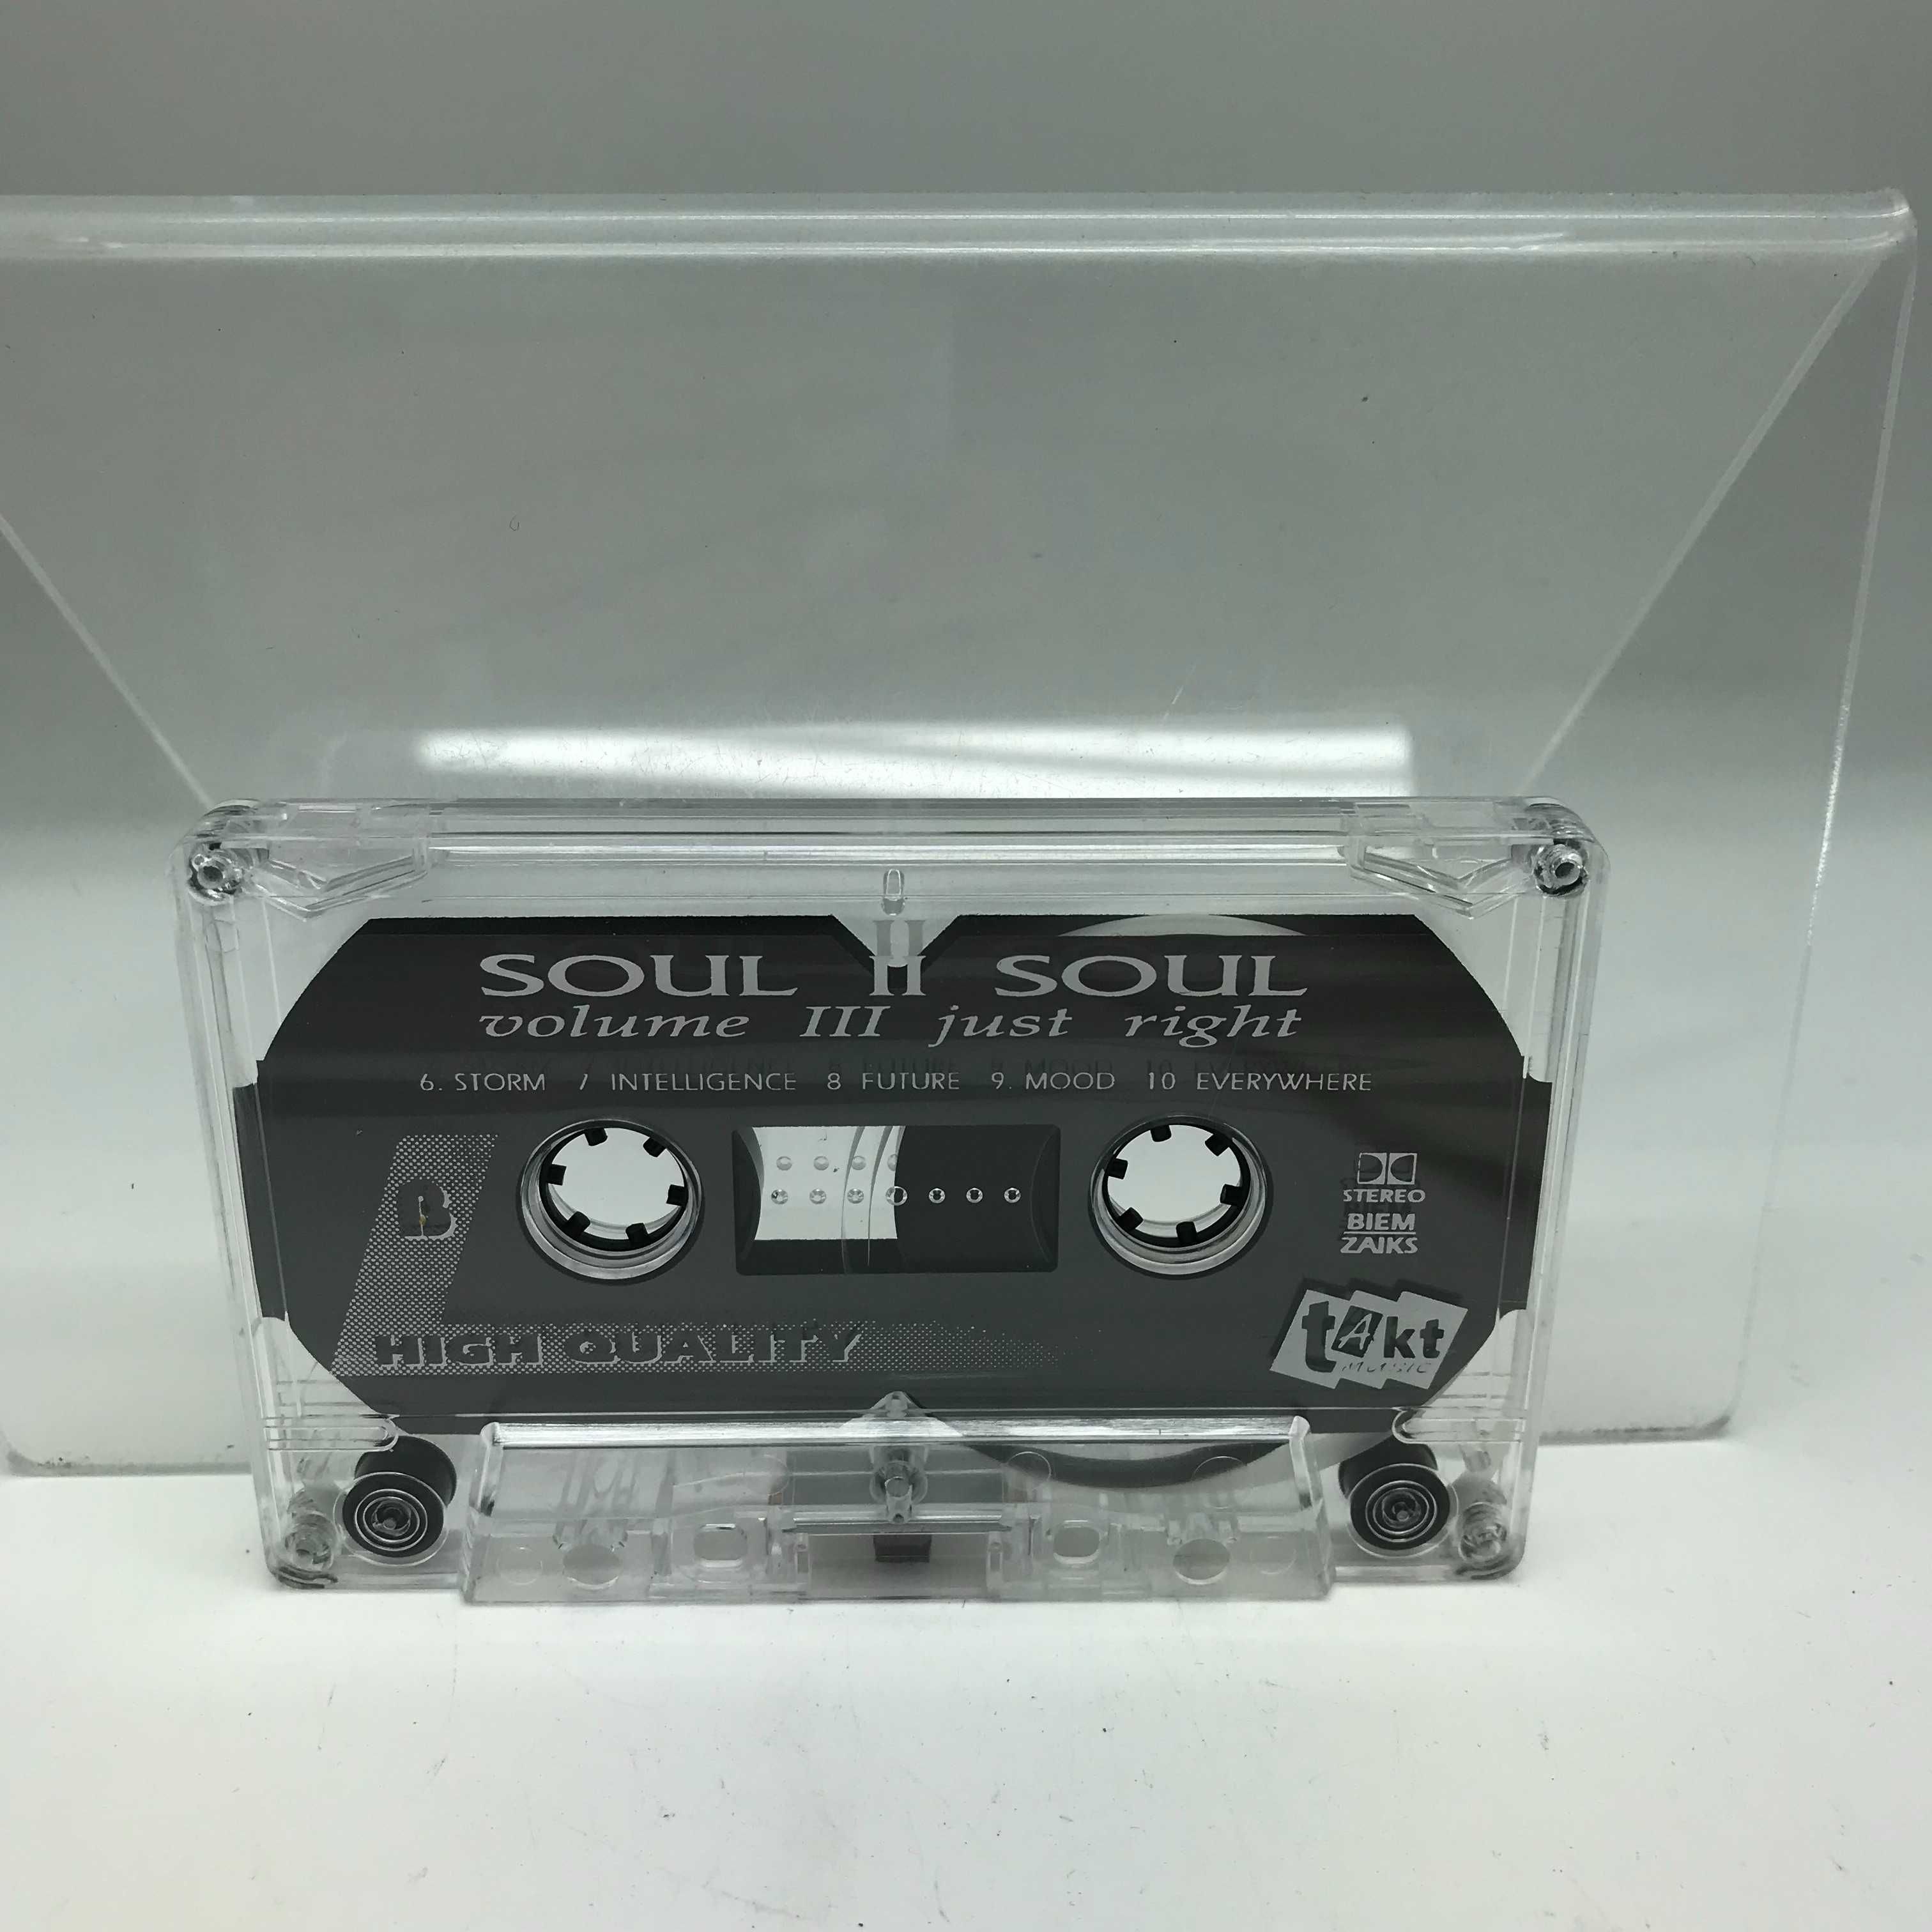 kaseta soul II soul - volume III just right (3016)